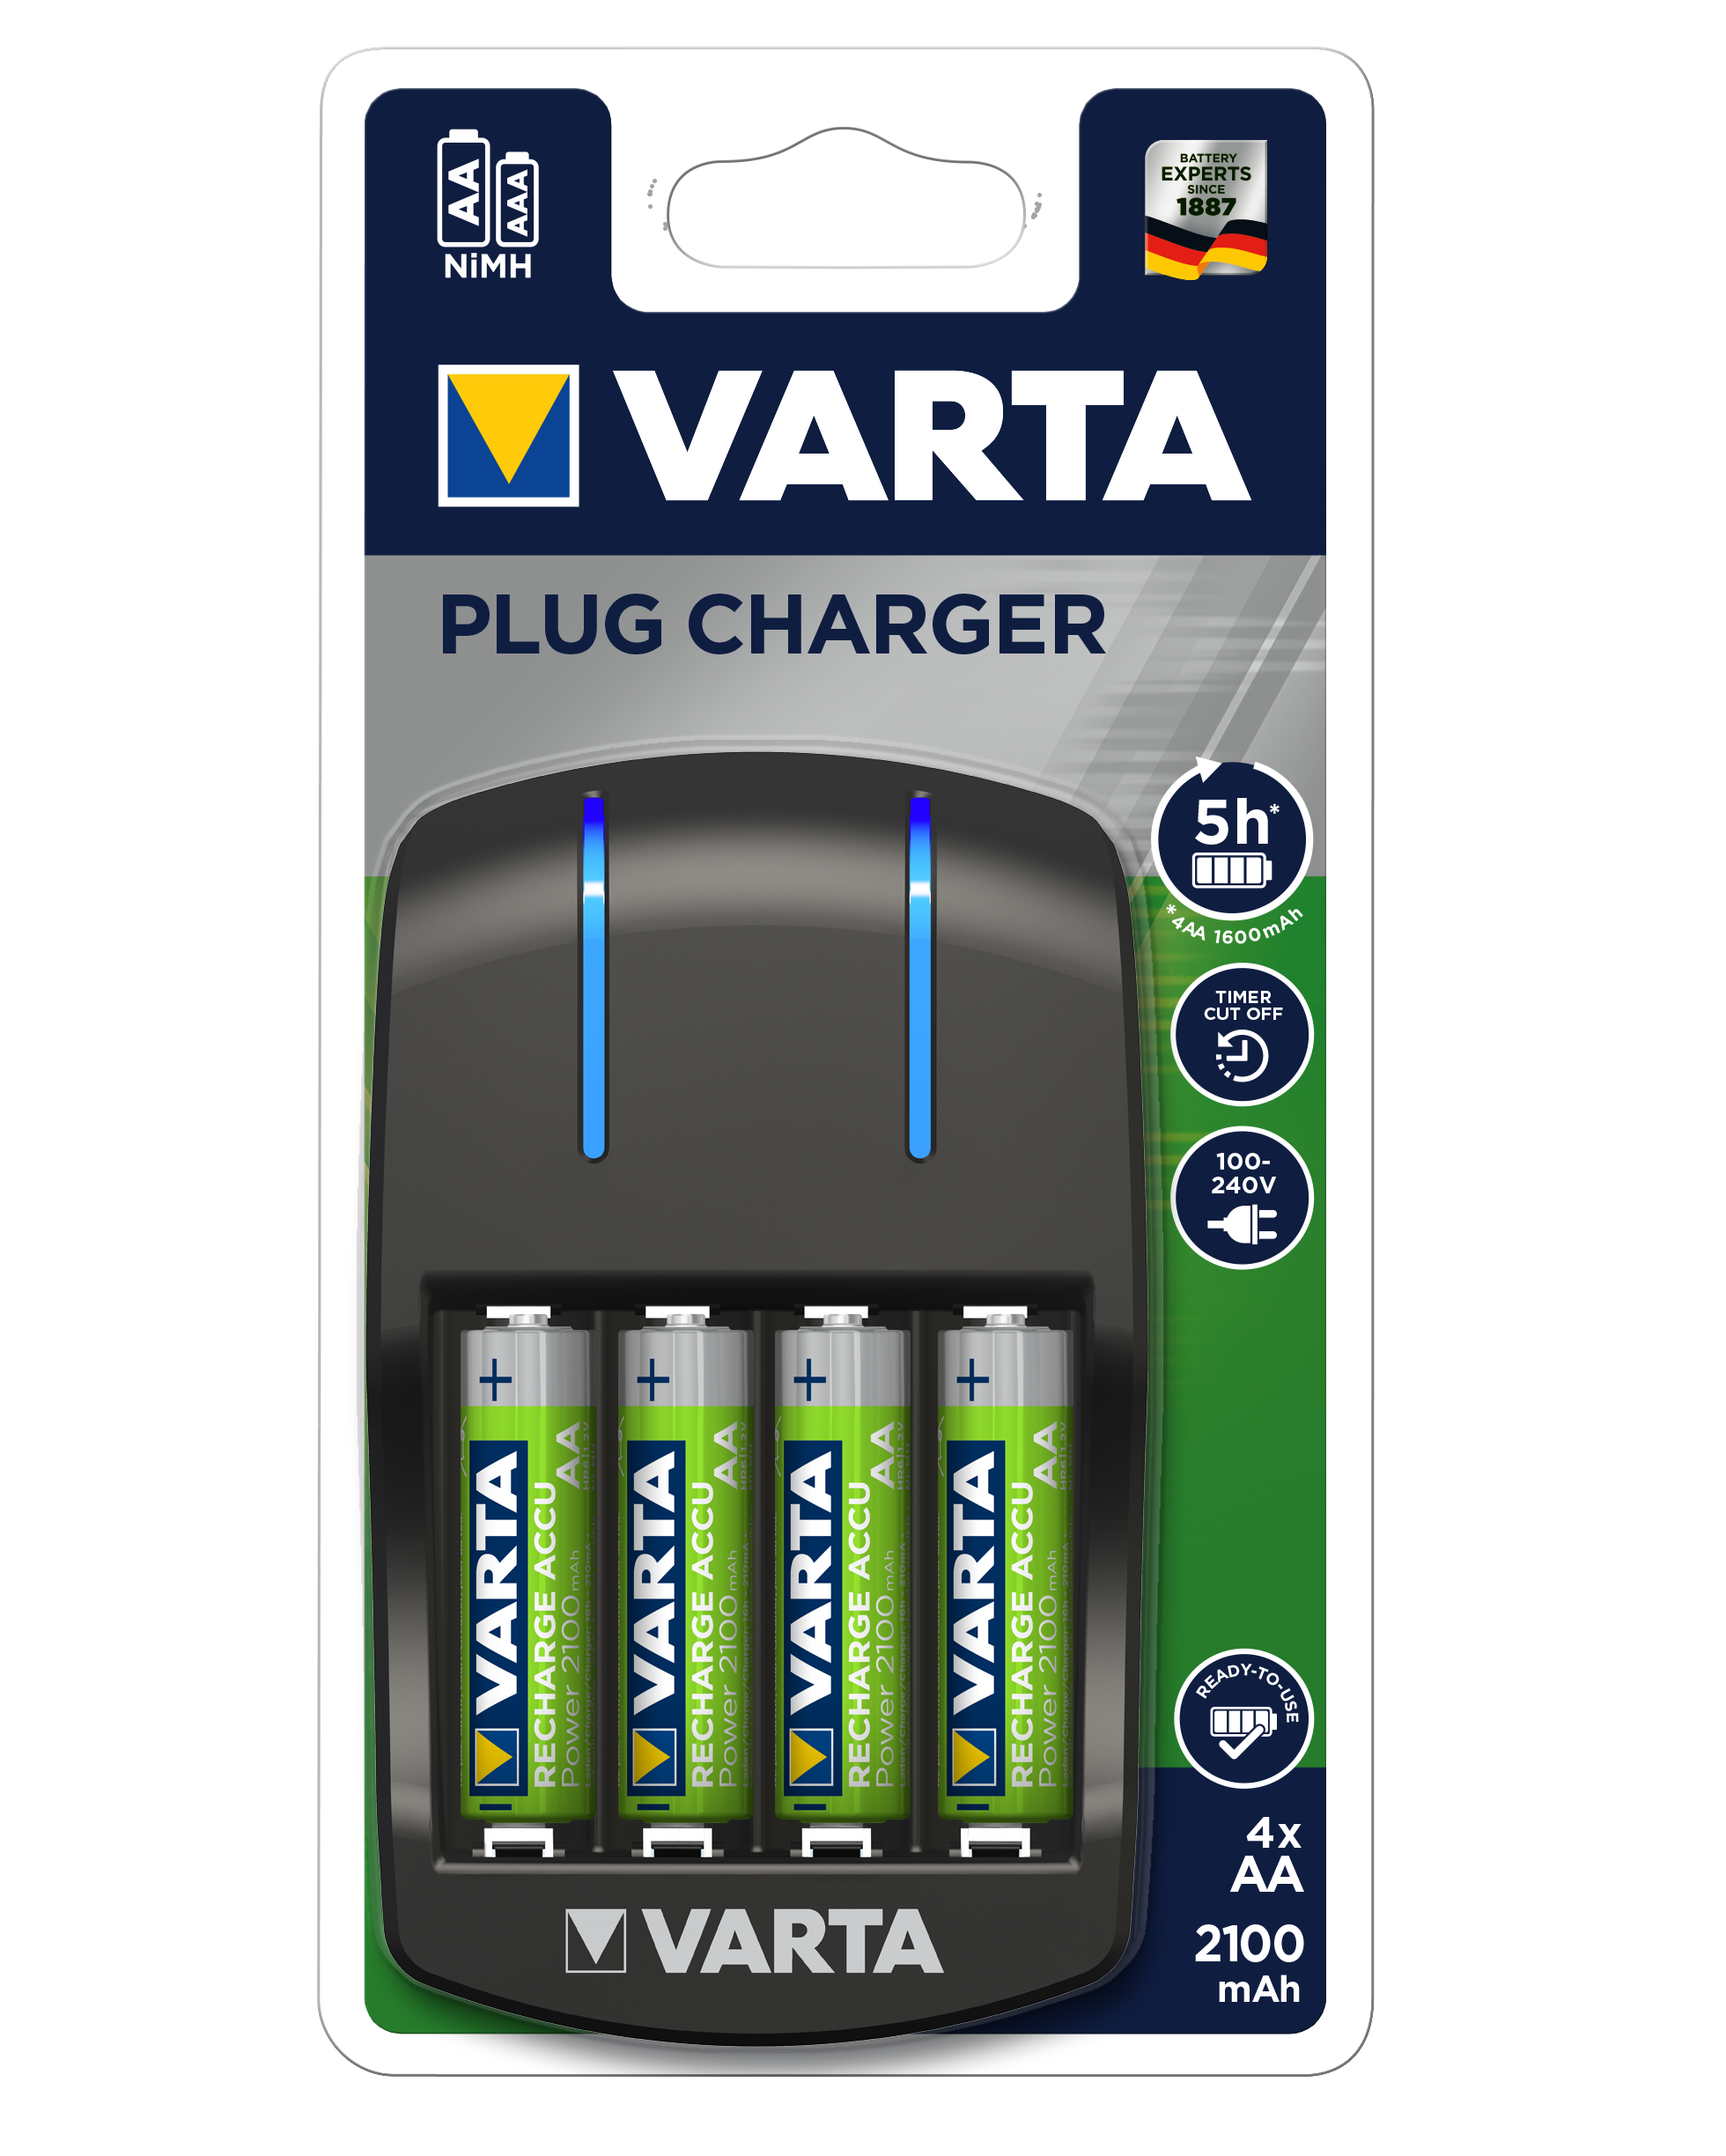 Зарядное ус-во VARTA Plug Charger AAA/AA +4xAA 2100мАч 5 часов timer